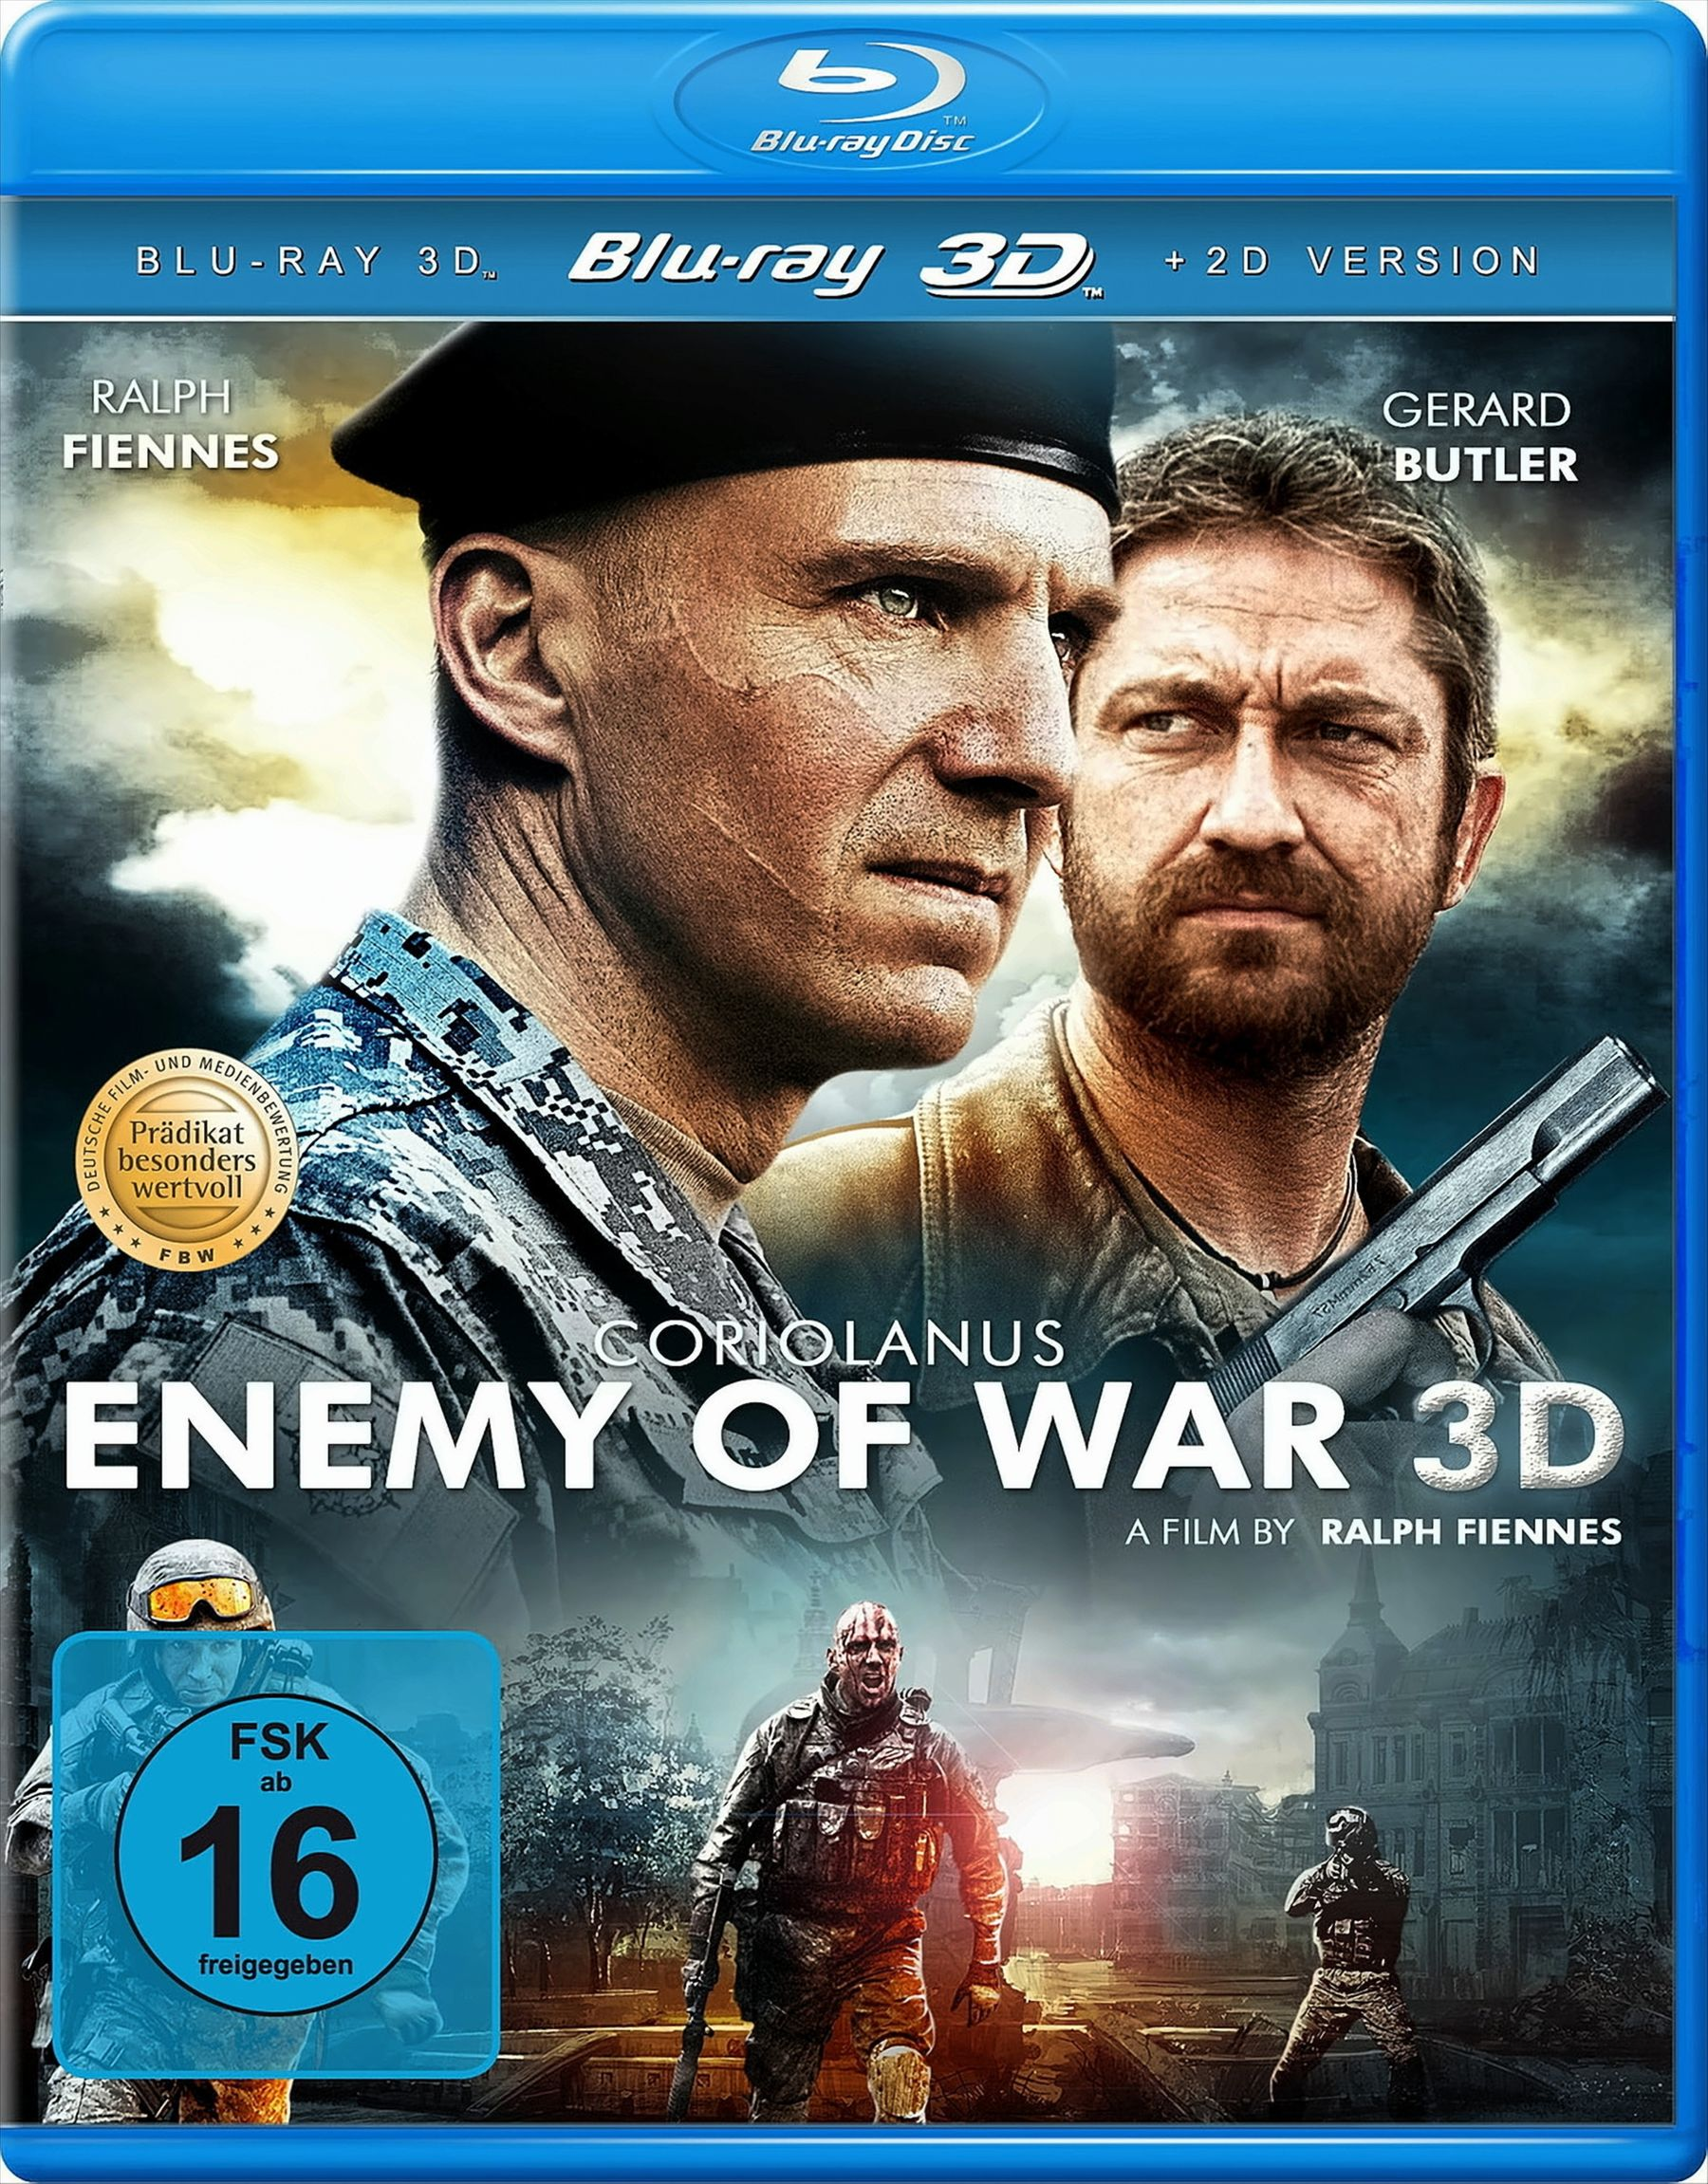 Coriolanus of Enemy - War Blu-ray 3D